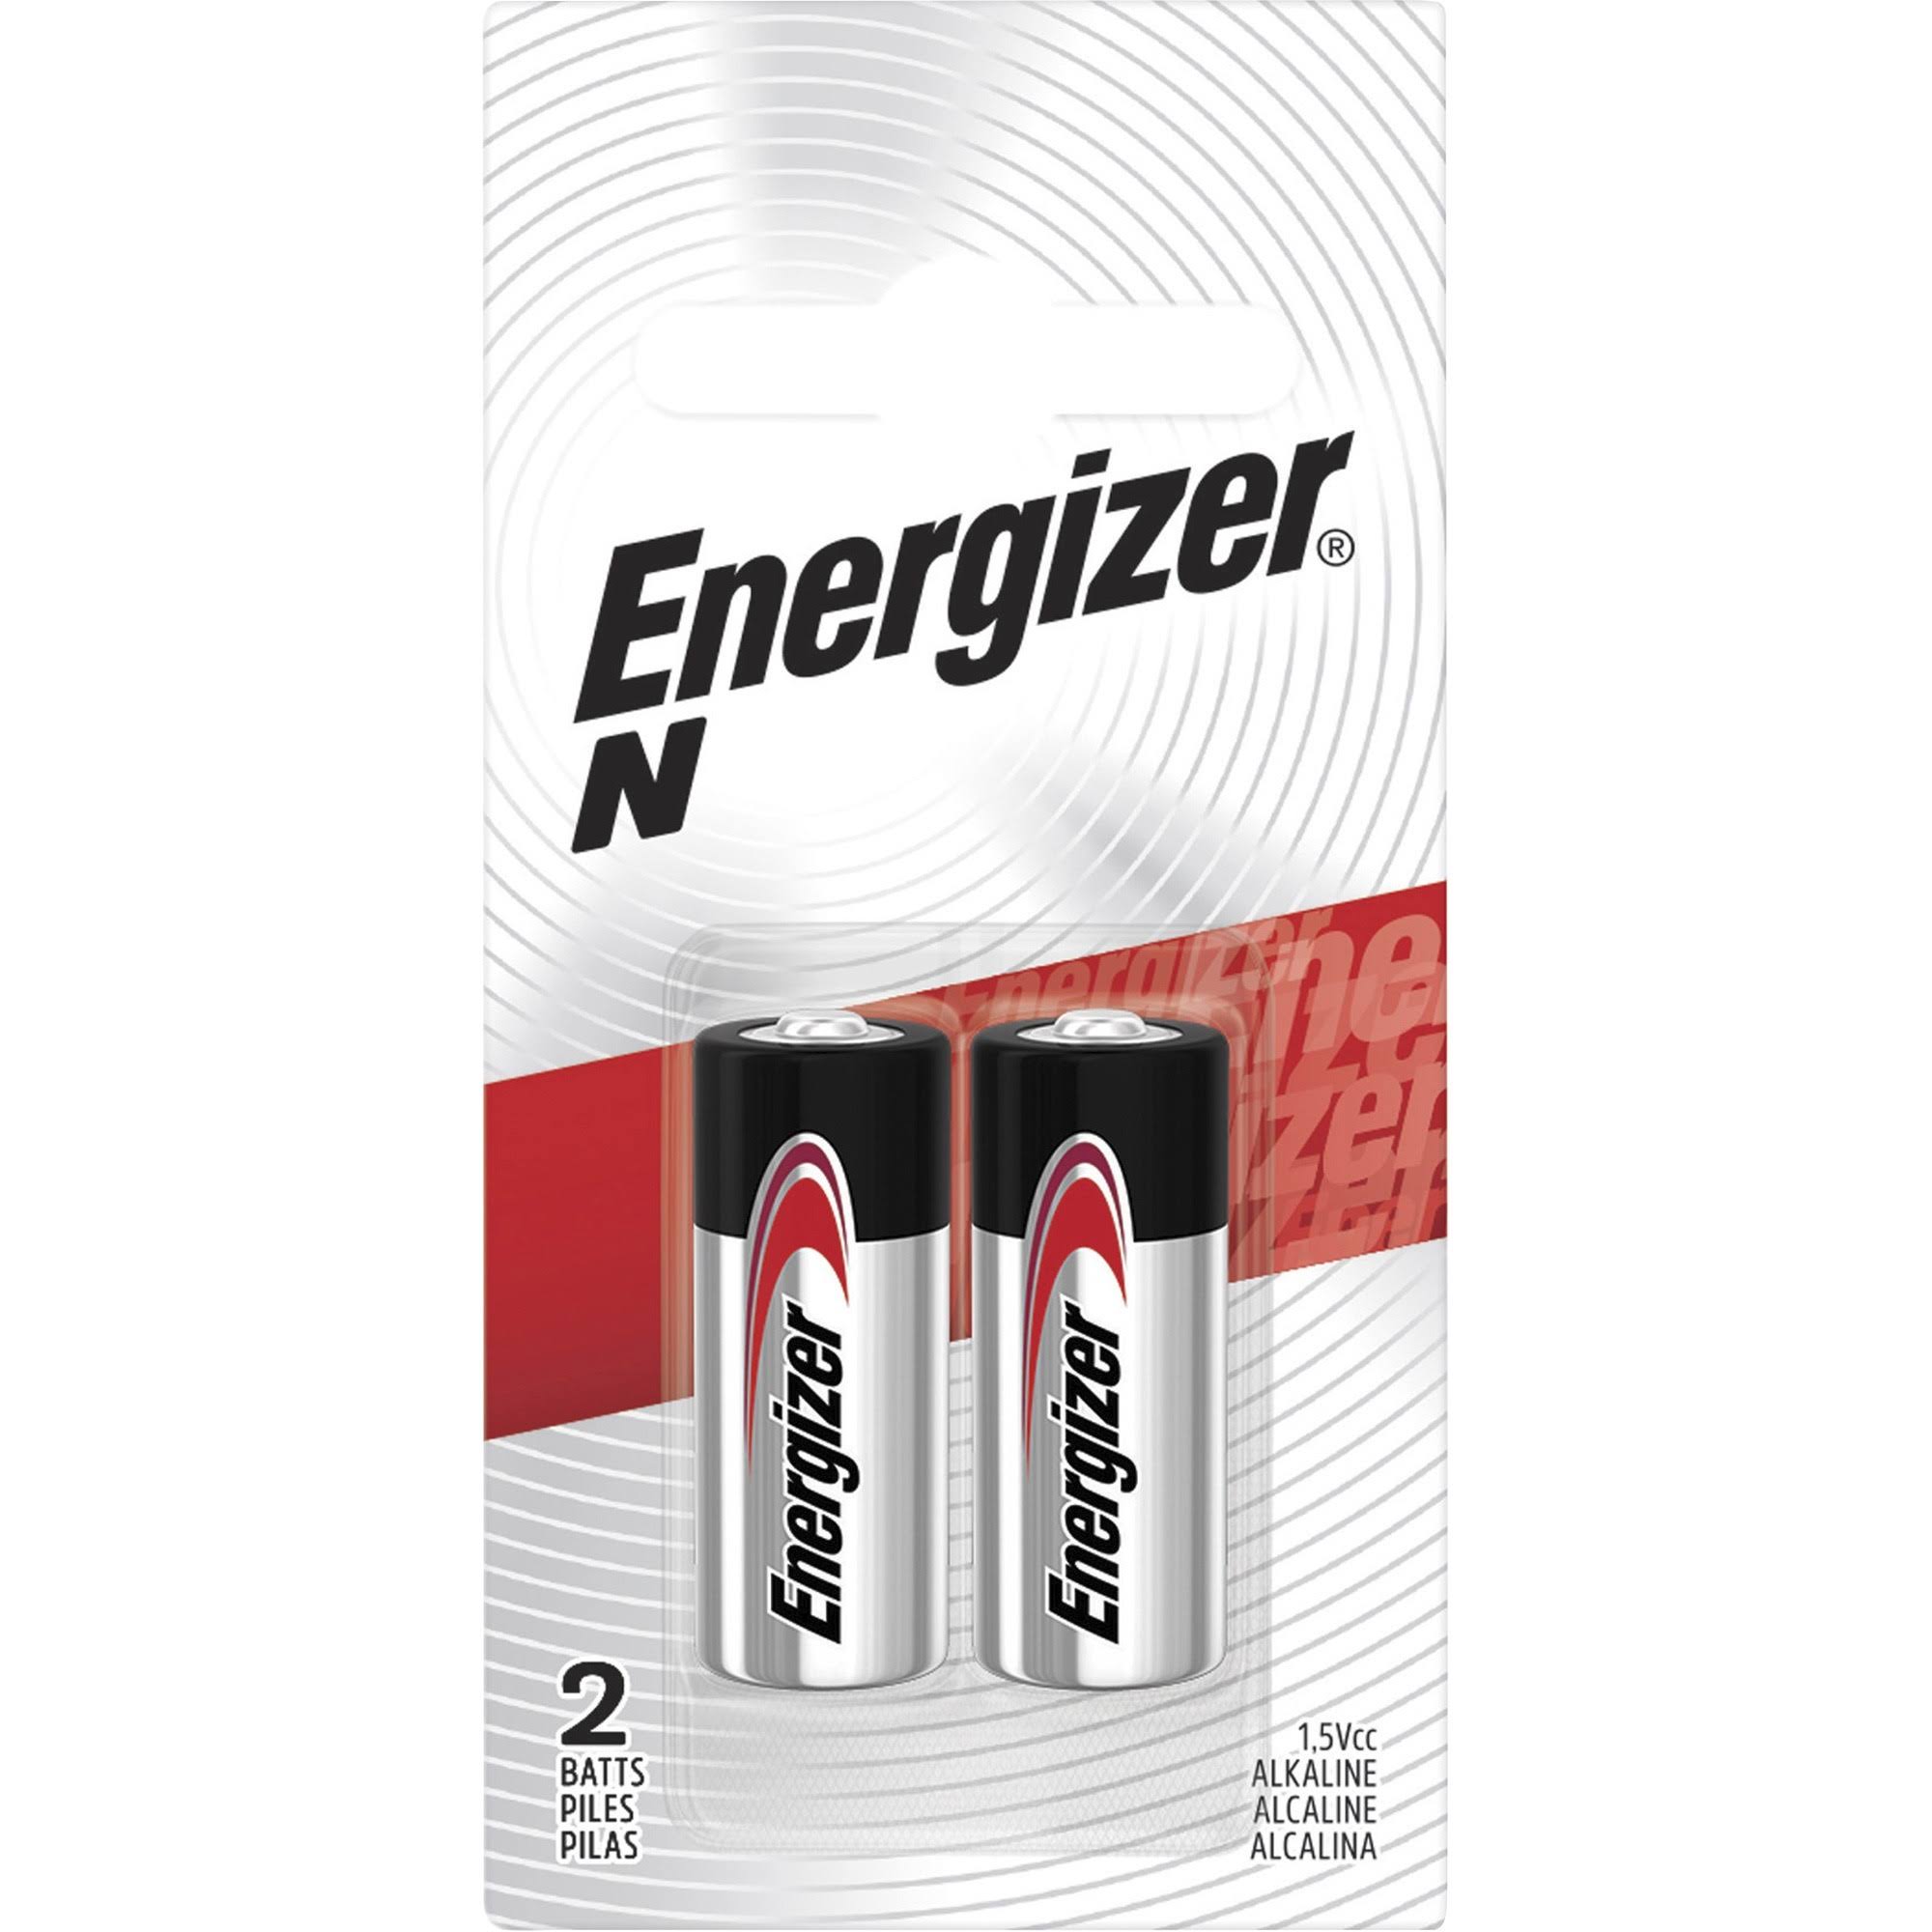 Energizer Alkaline Batteries - Size N, 2pk